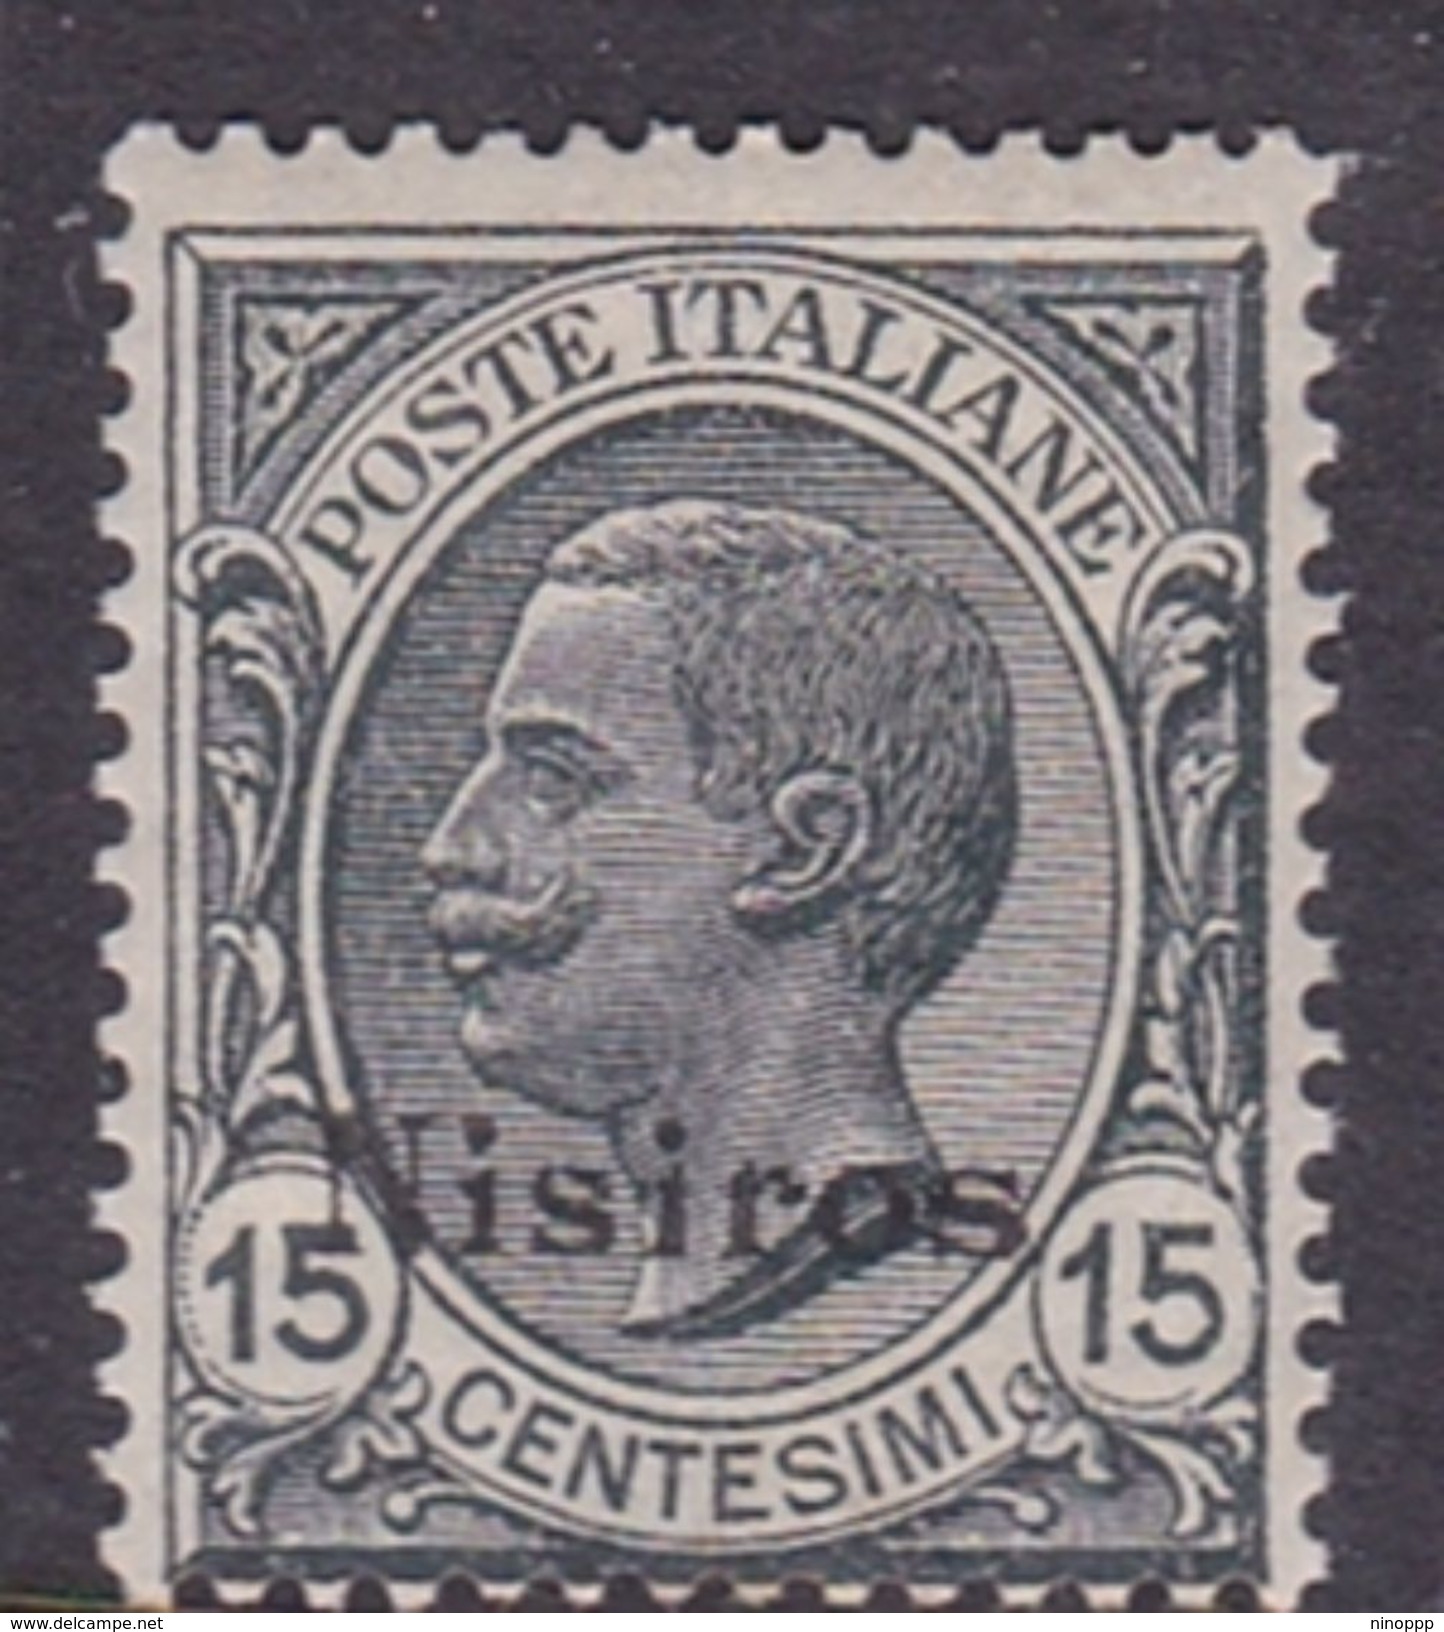 Italy-Colonies And Territories-Aegean-Nisiro S 10  1921 15c Slate MH - Egée (Nisiro)